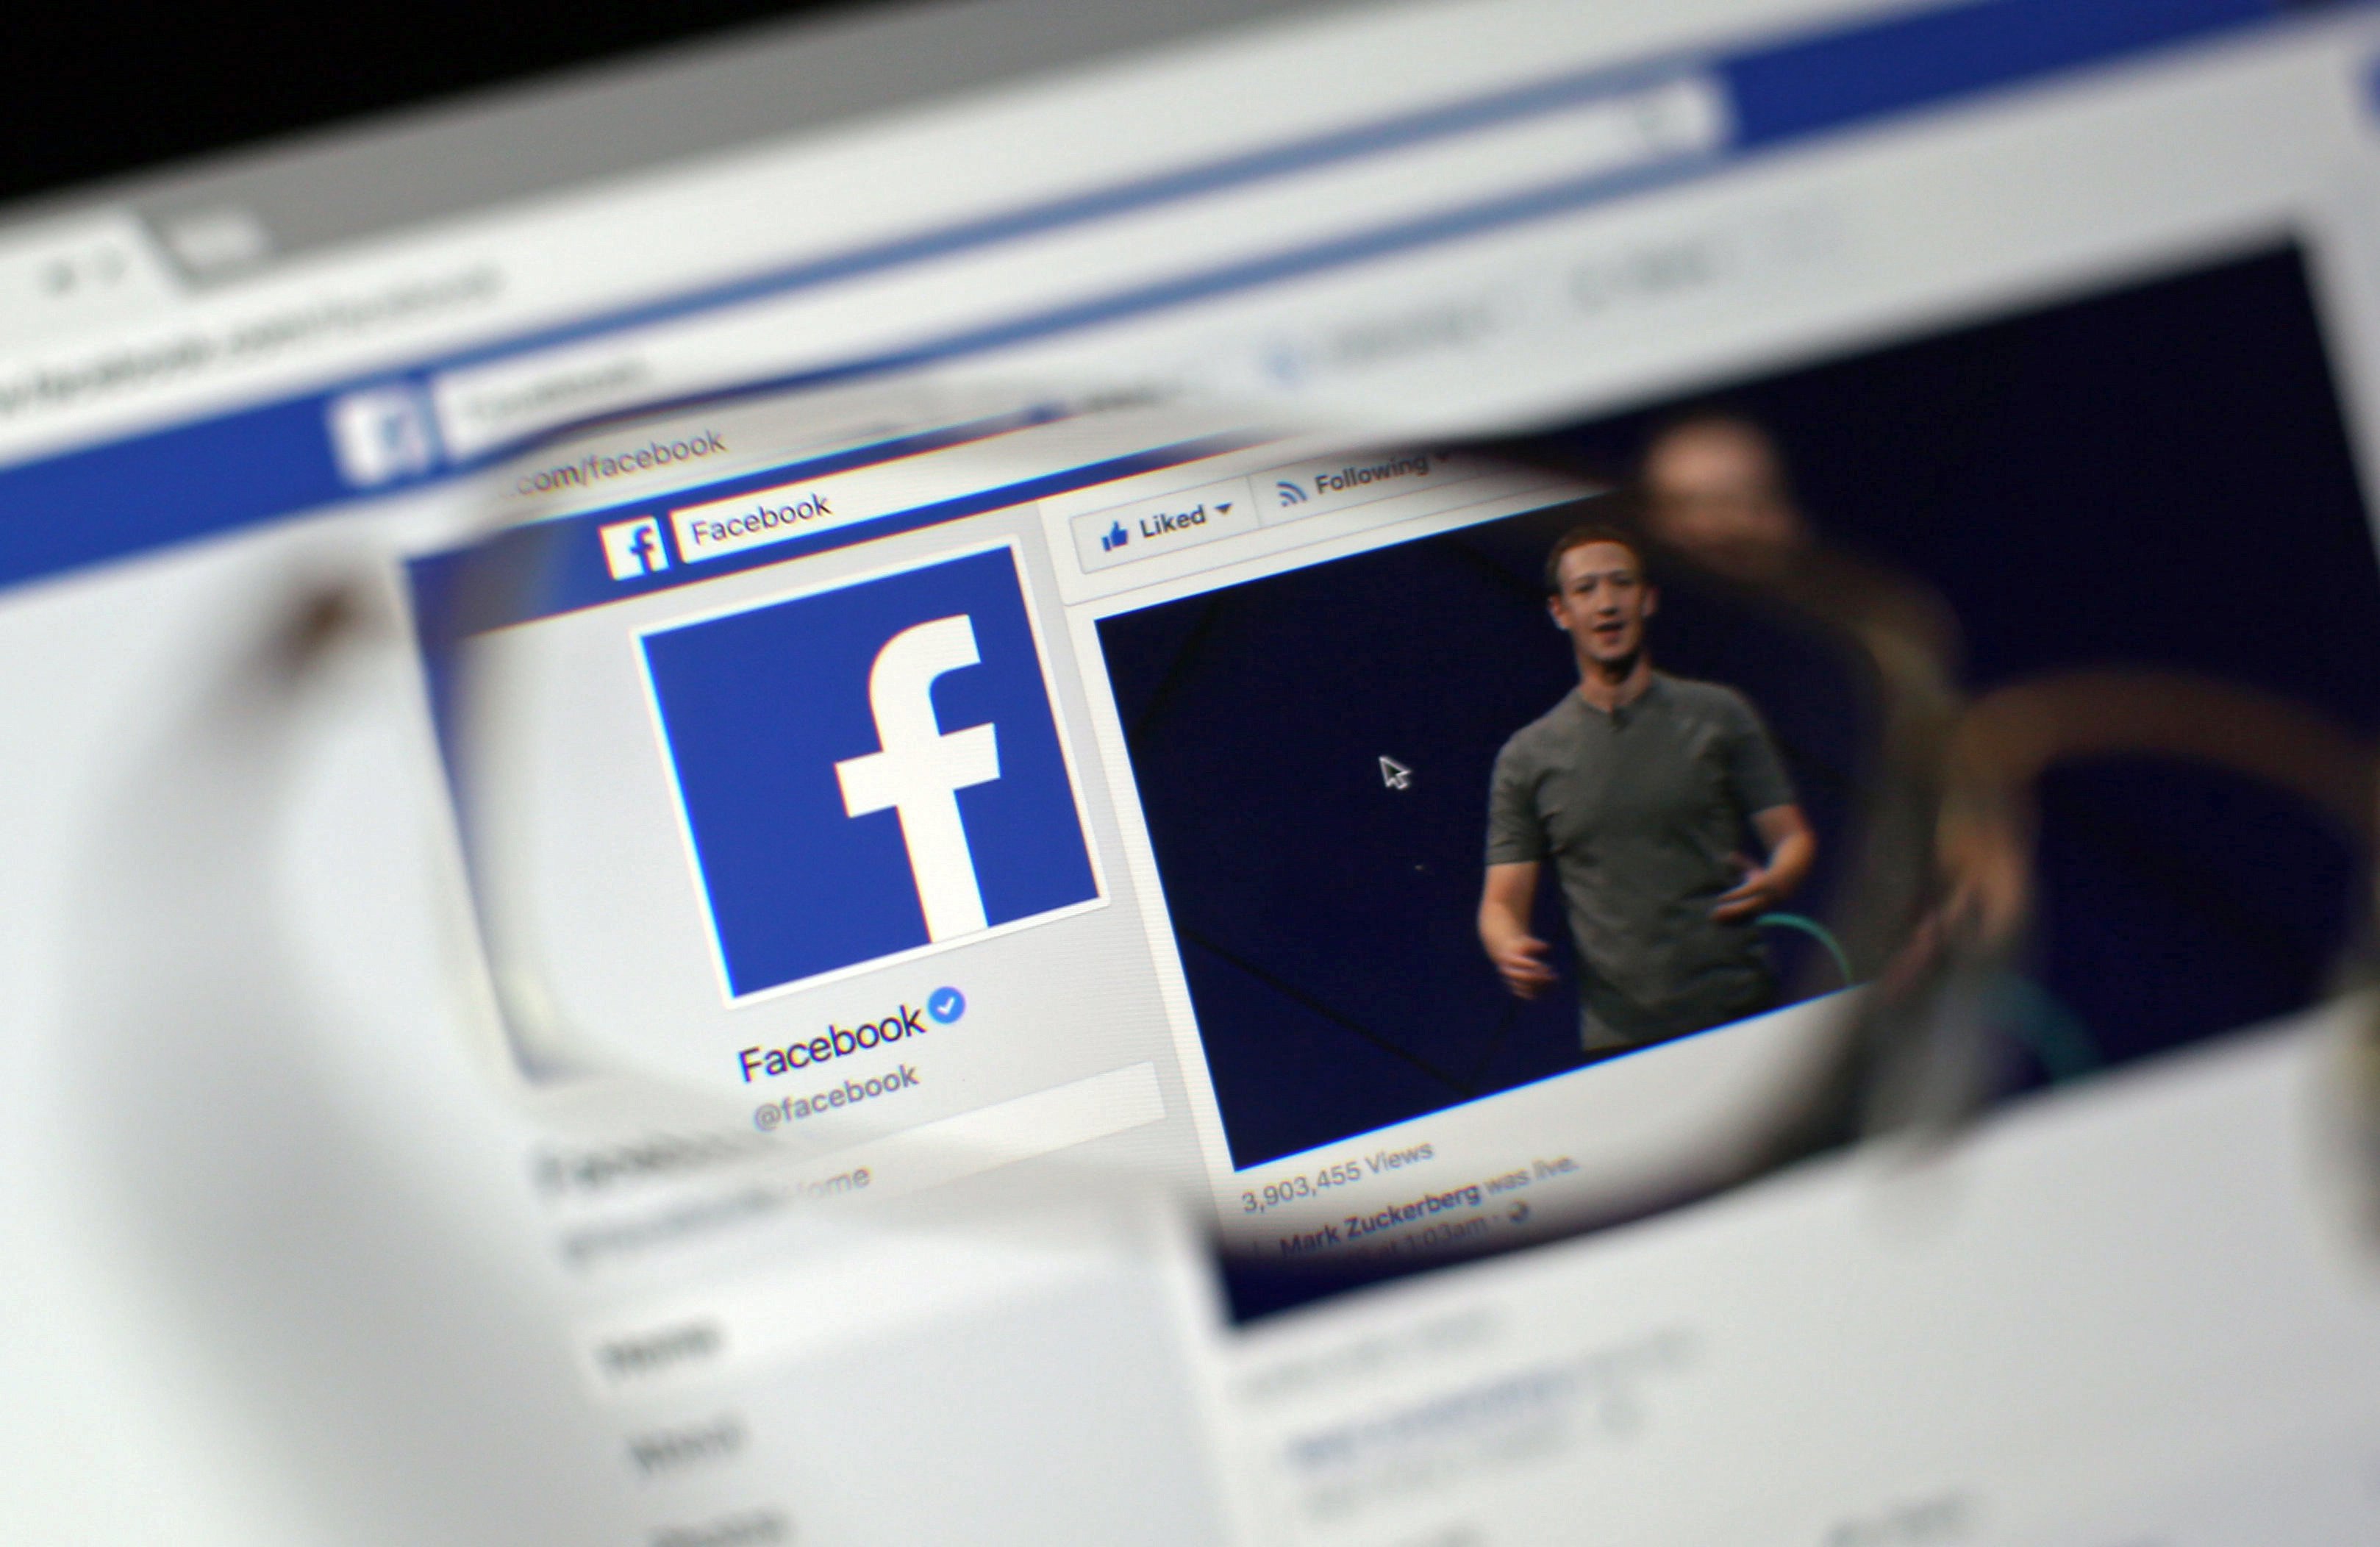 Facebook: Έμφαση και στις ειδήσεις από τοπικά μέσα ενημέρωσης